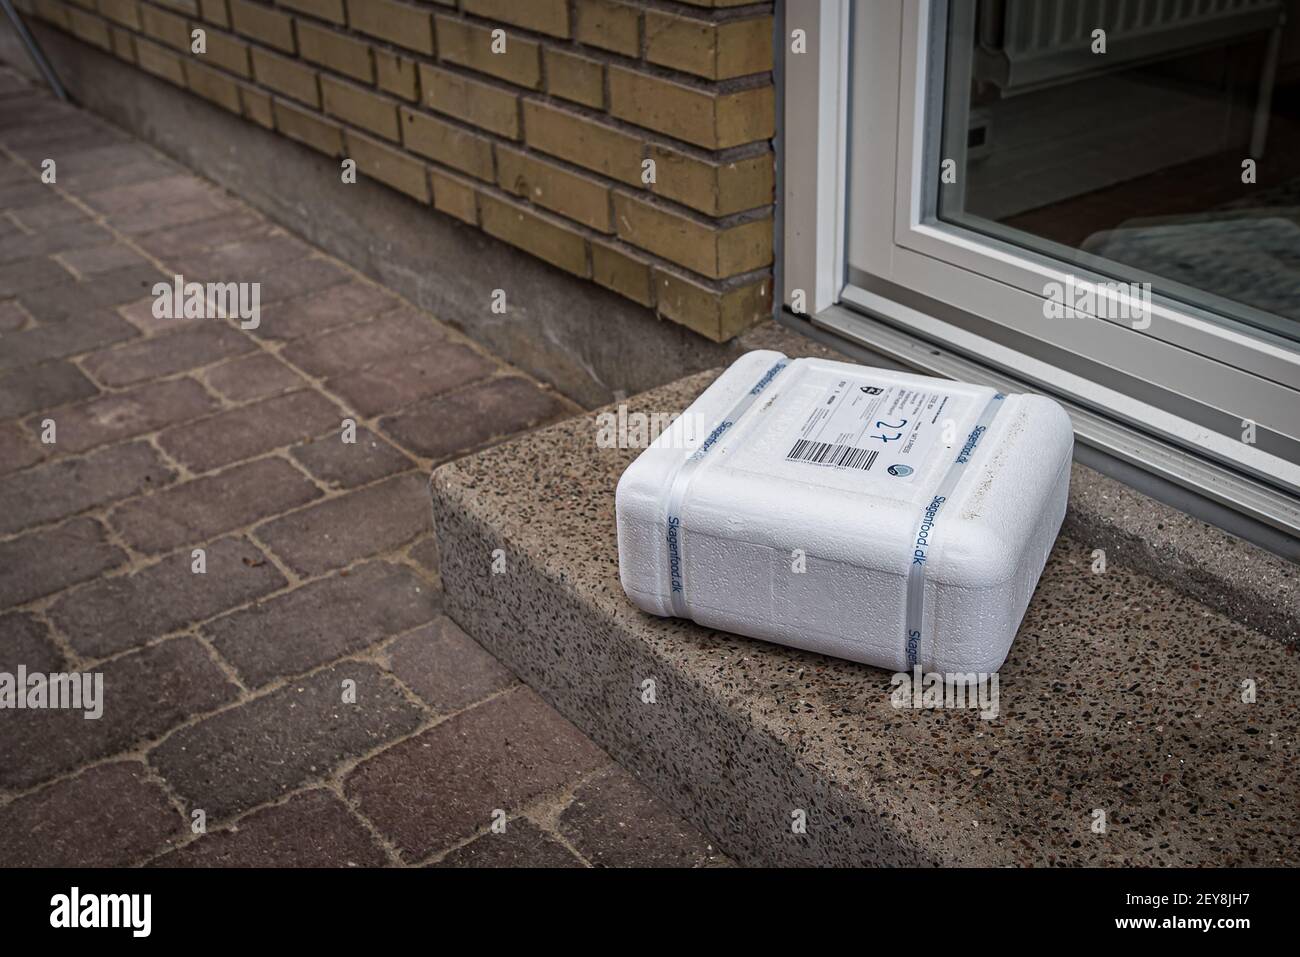 a white styrofoam package on the doorstep outside the front door, Denmark, Mars 4, 2021 Stock Photo